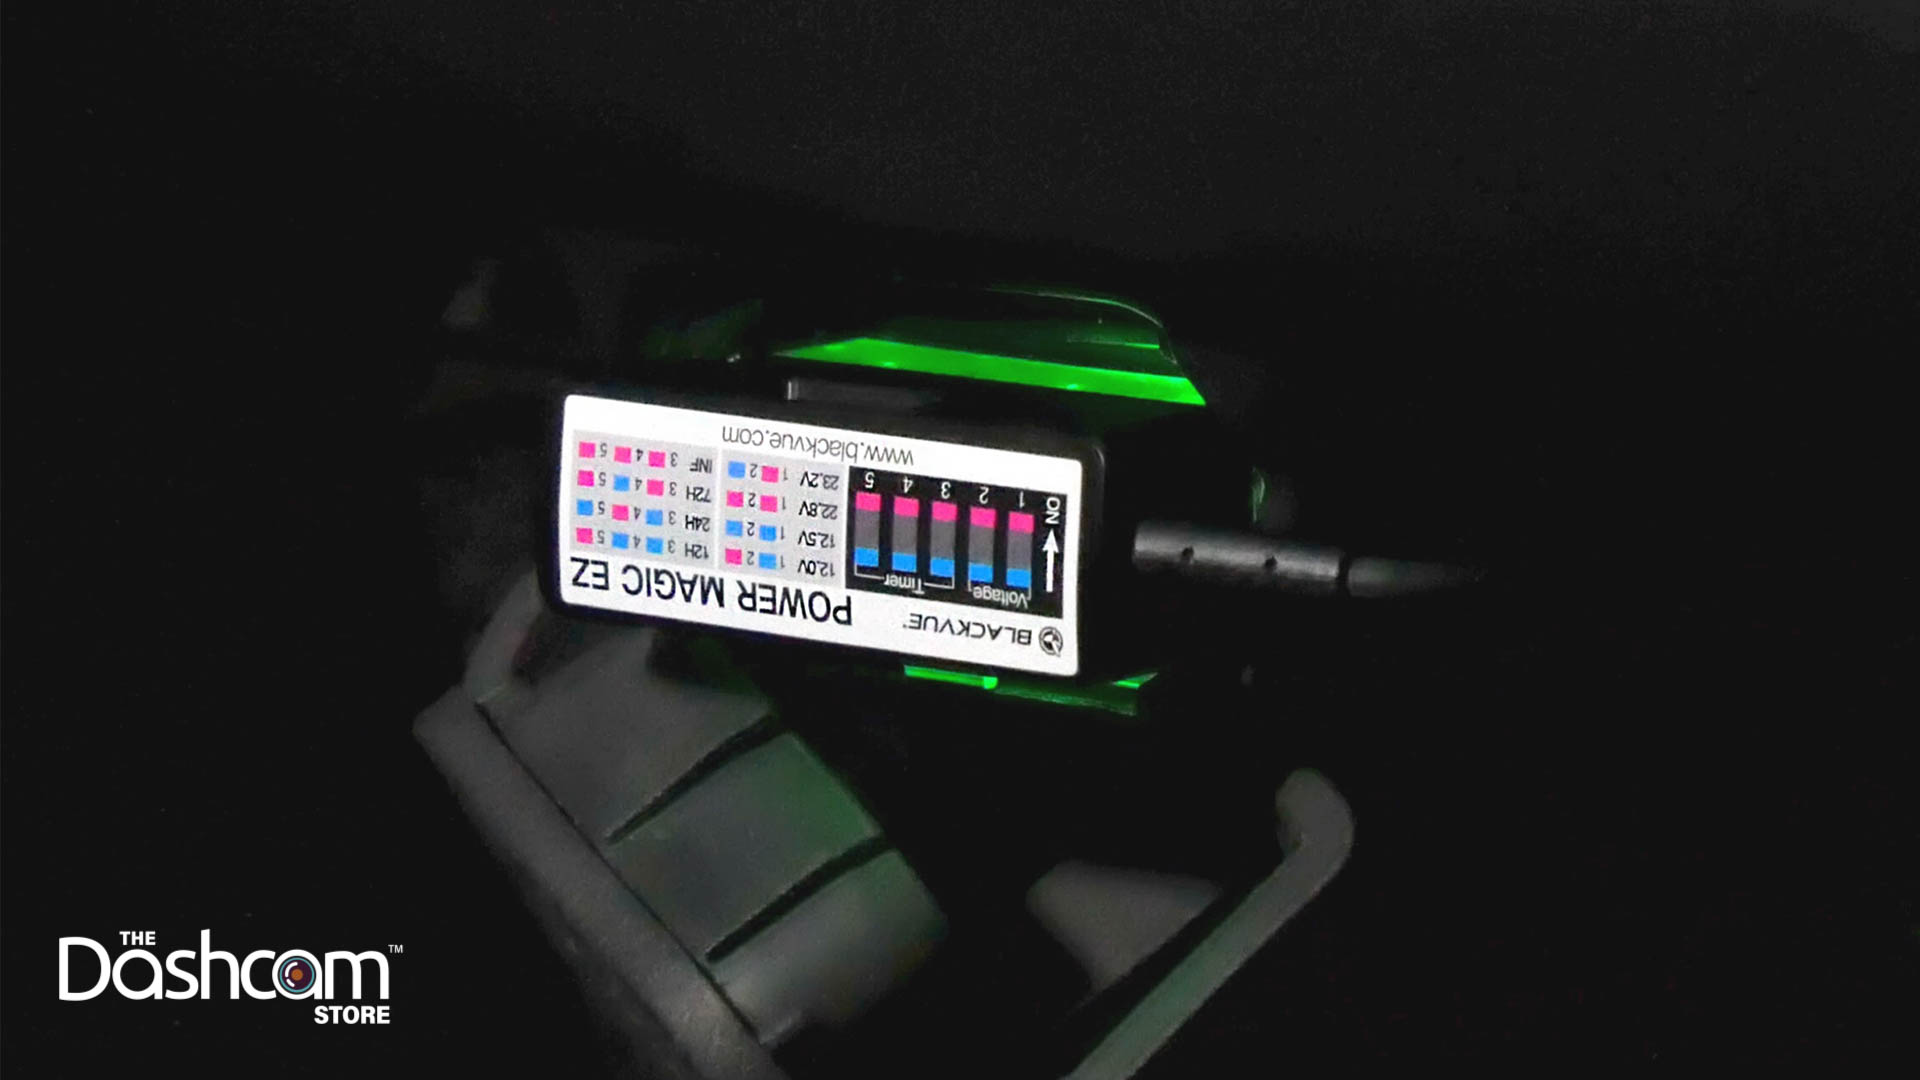 New Power Magic EZ – OBD Kit for Dash Cam Parking Mode - BlackVue Dash  Cameras